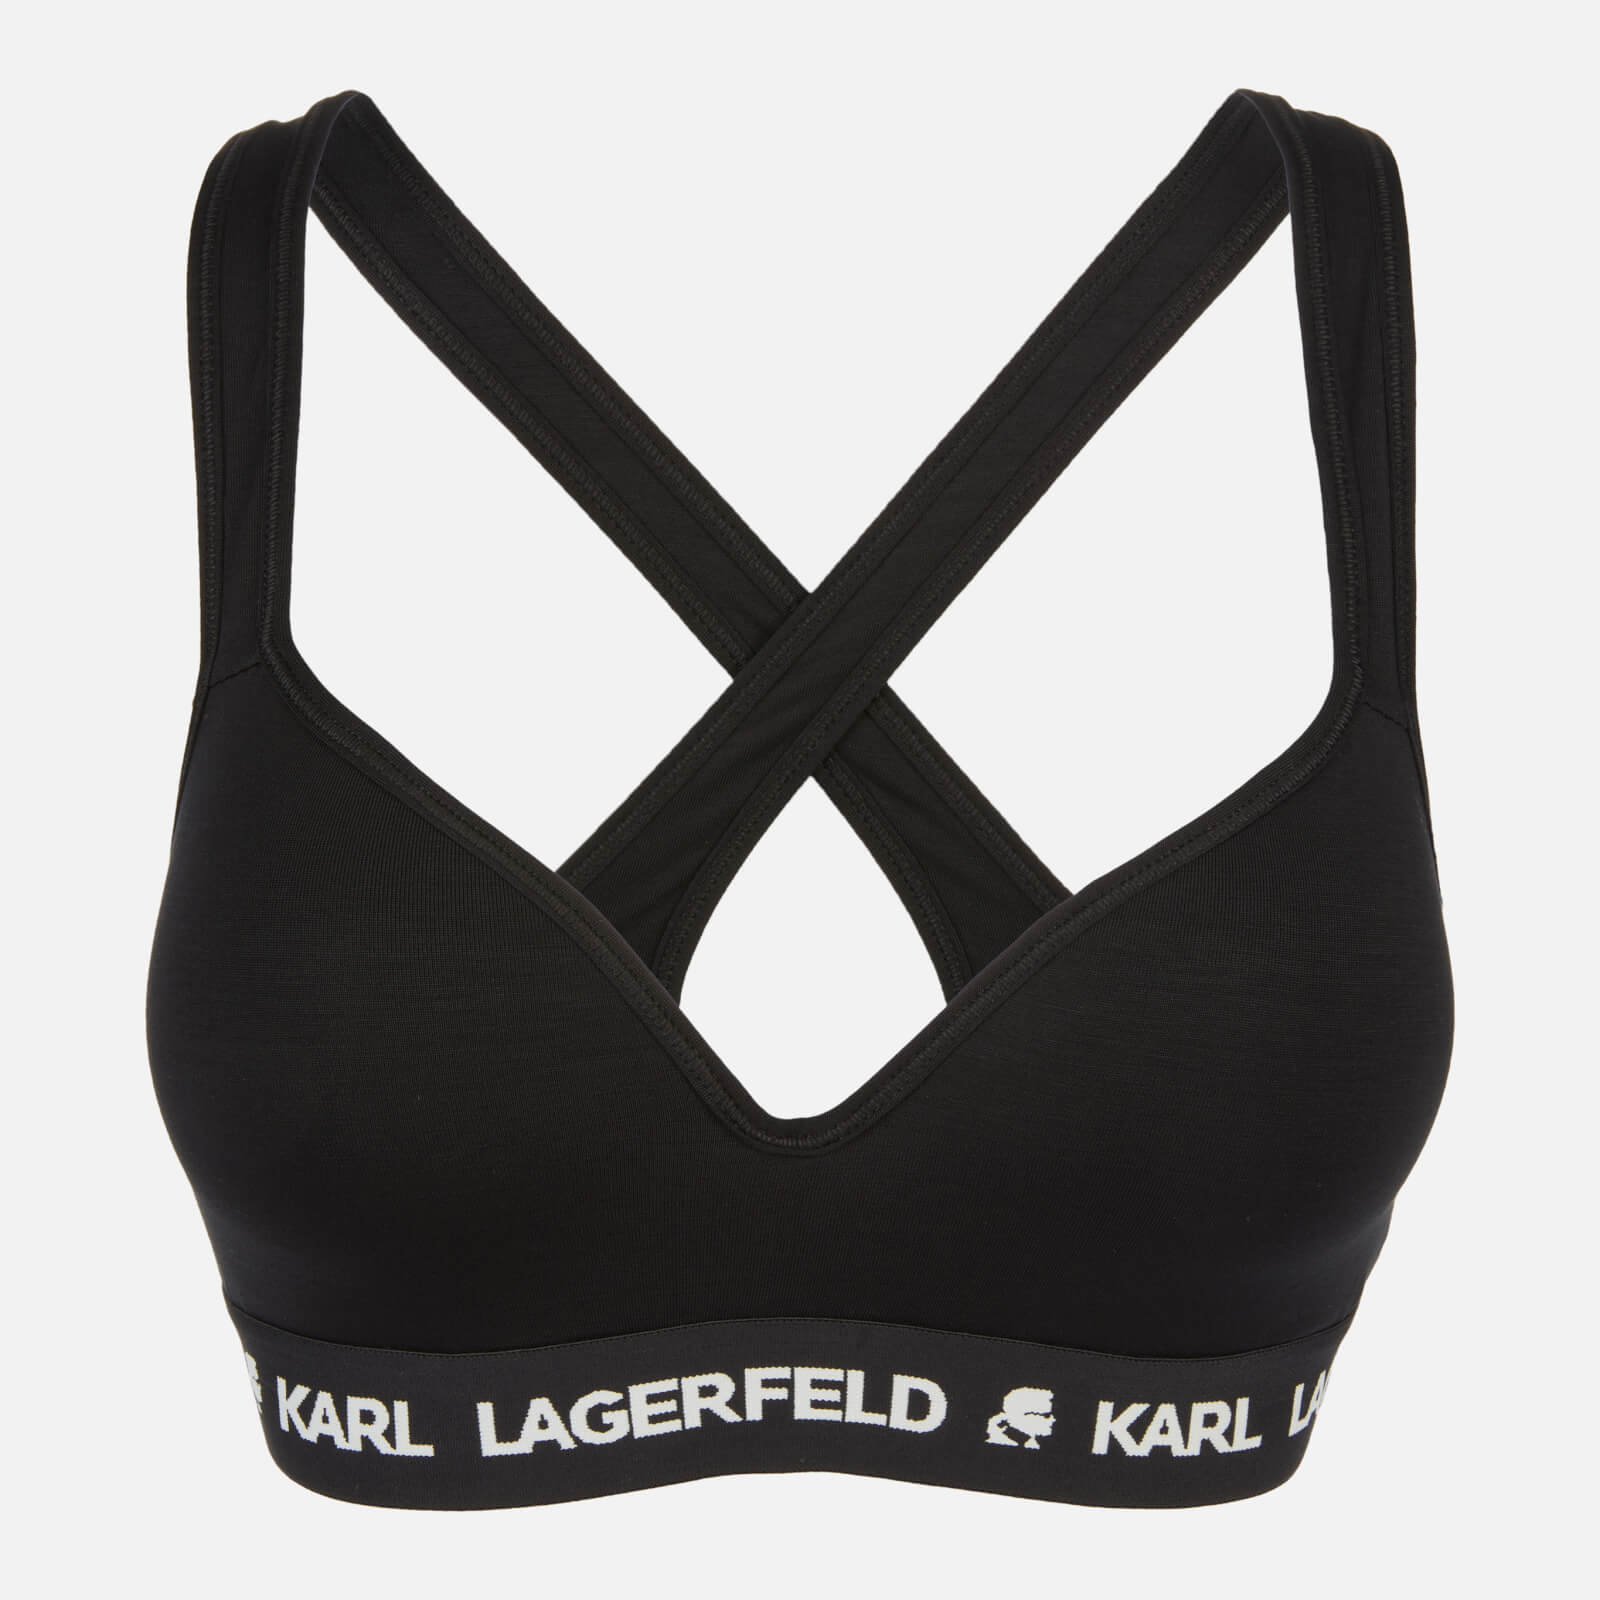 KARL LAGERFELD Women's Padded Logo Bra - Black - XS